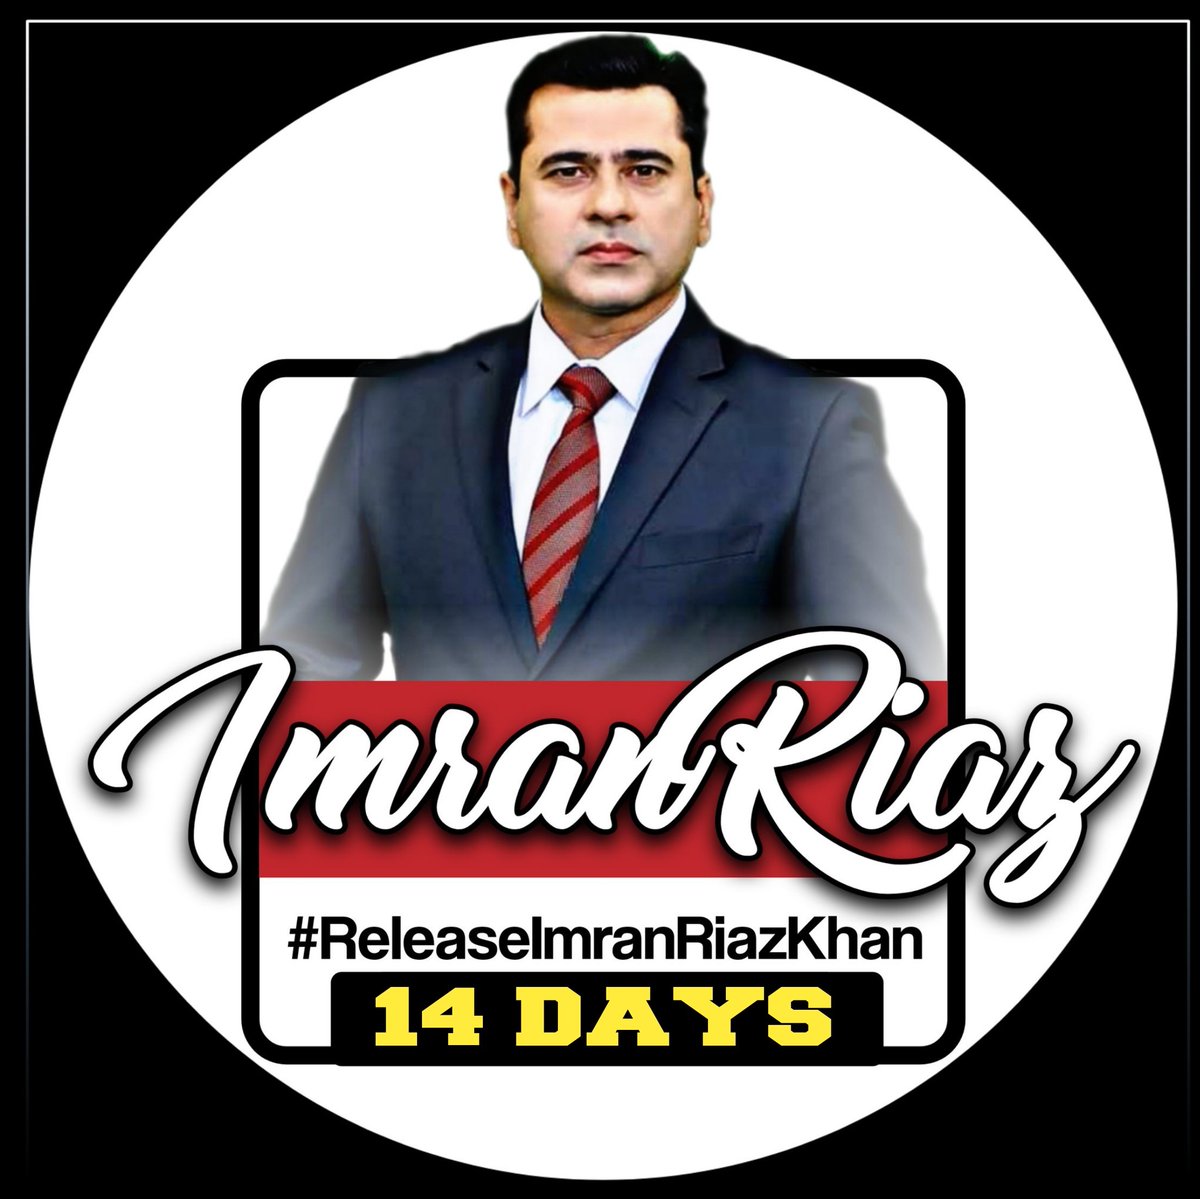 Imran Riaz Khan 
14 Days Of Unlawful Imprisonment.

#ReleaseImranRiazKhan